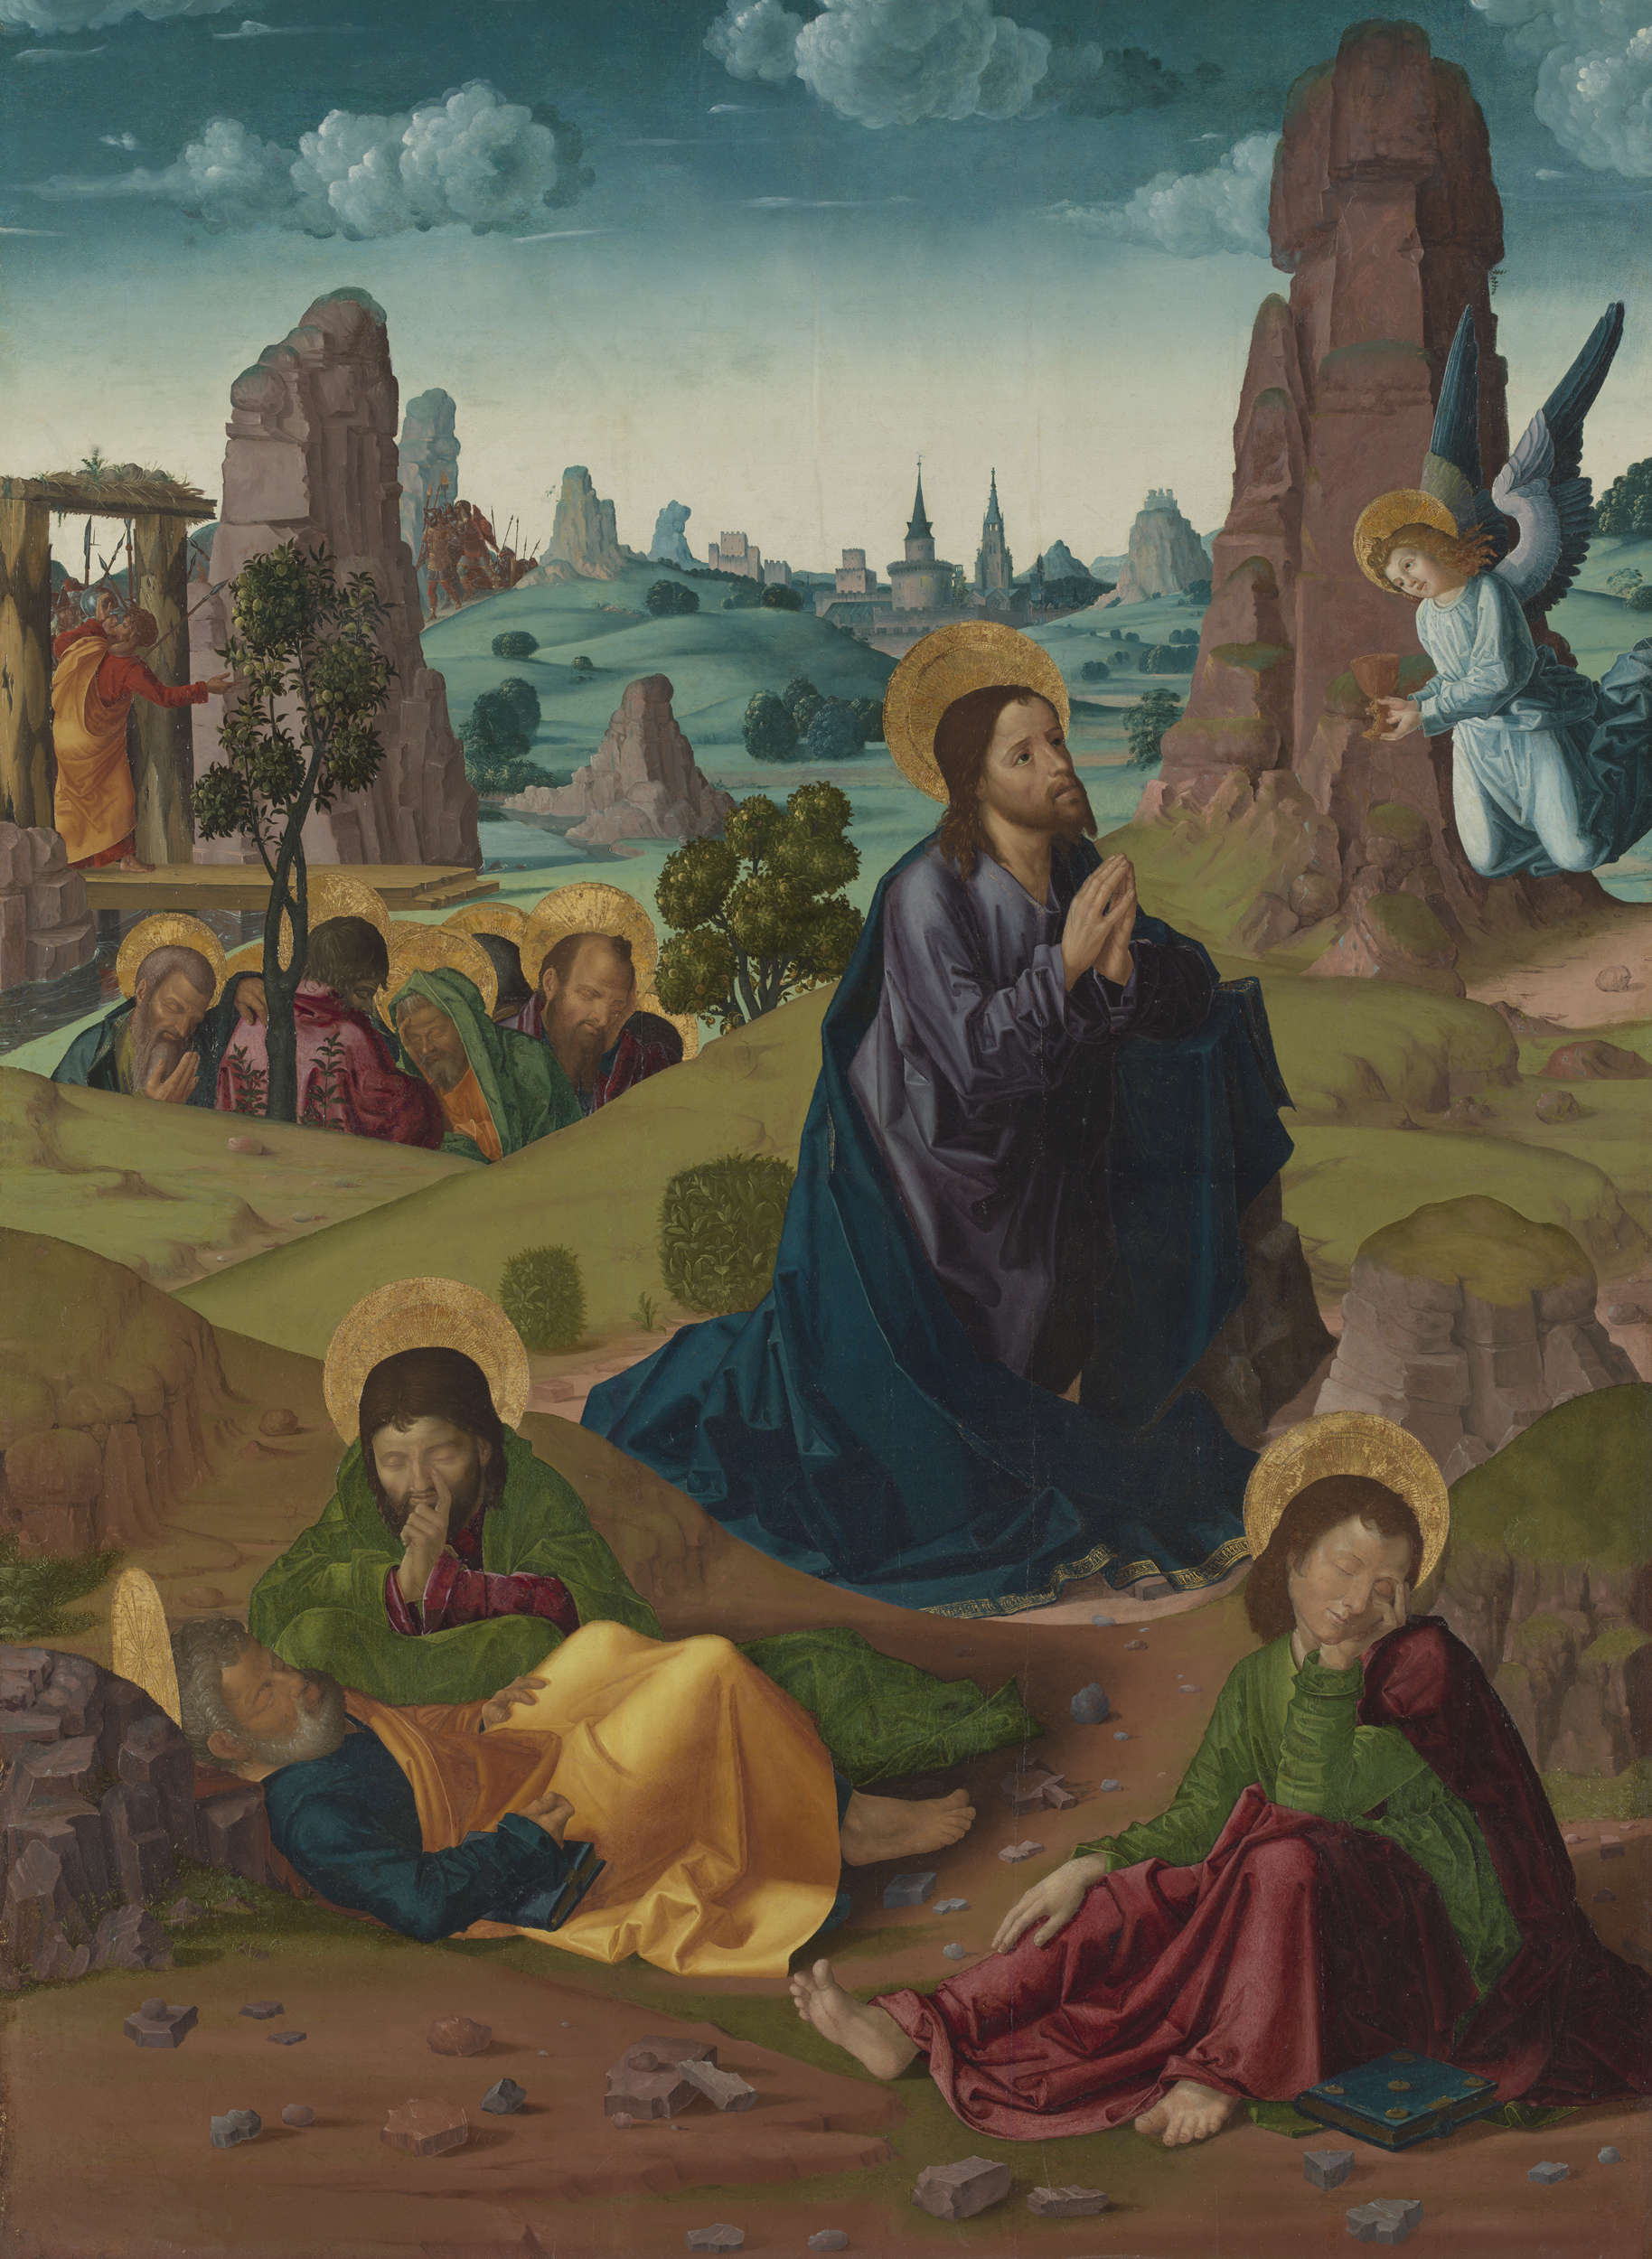 Paul of St. Leocadio, Oration in the Garden (c. 1490; oil on panel, 161 x 121.5 cm; Madrid, Prado)